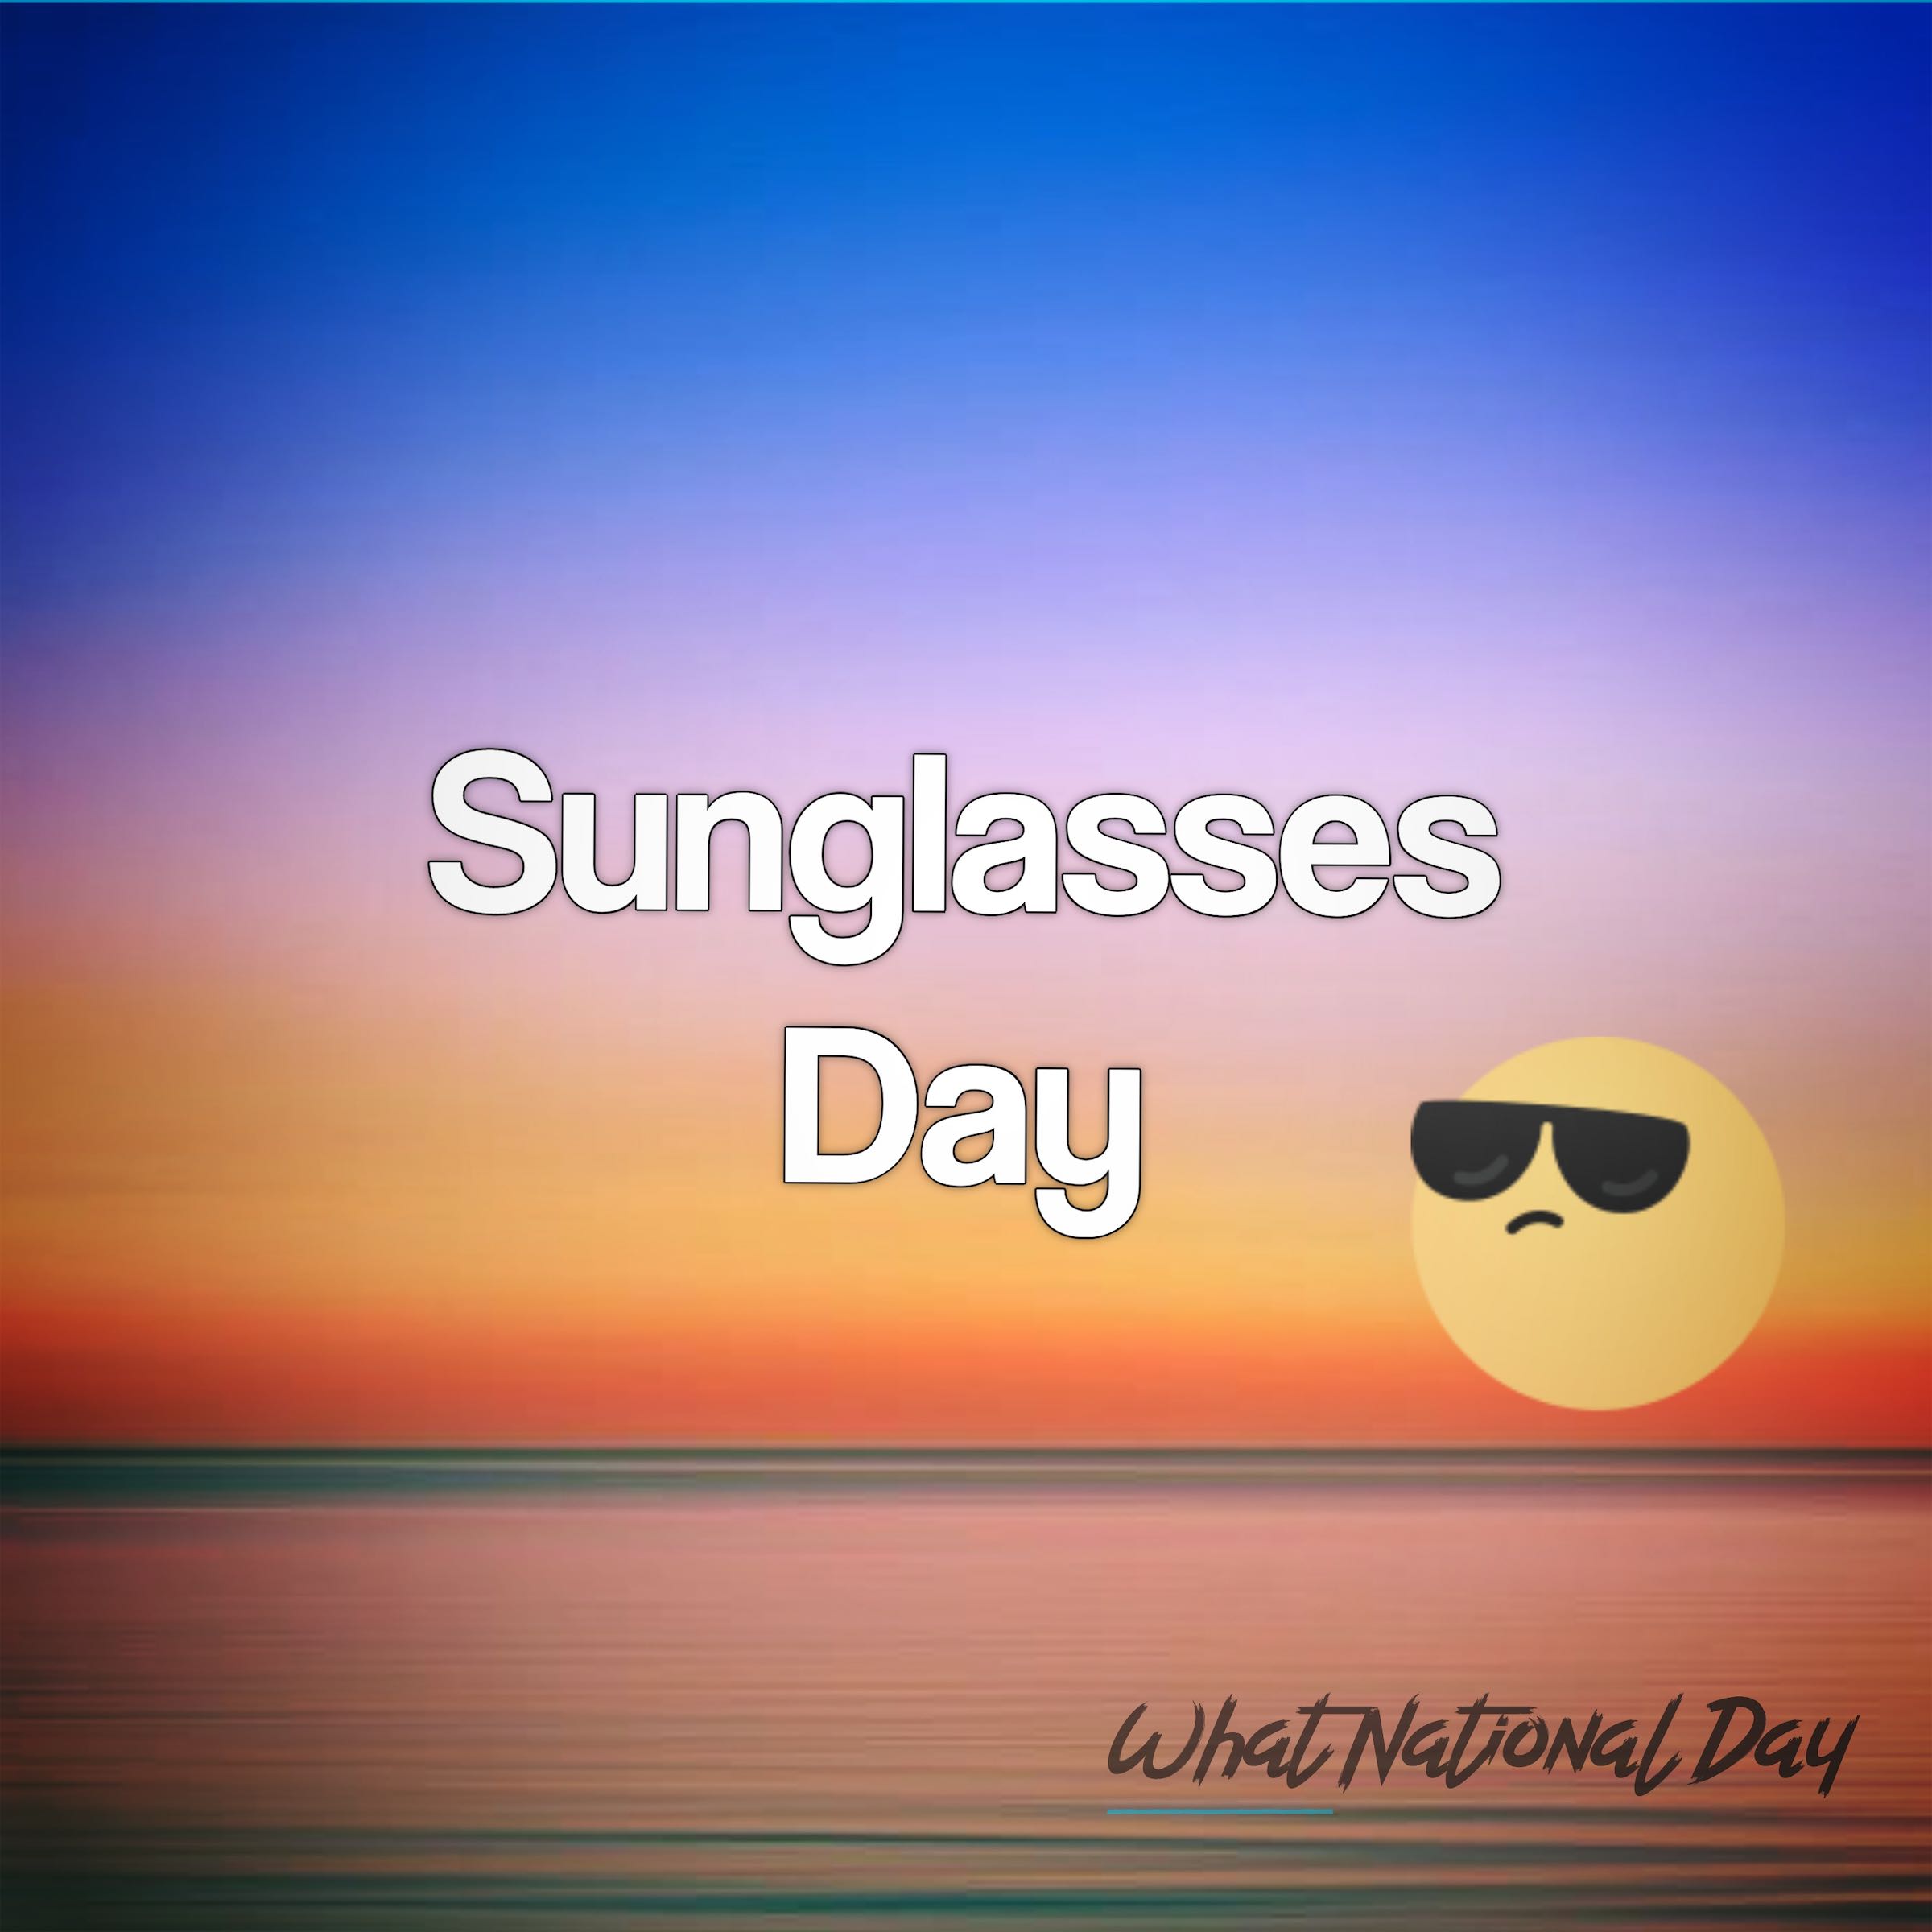 Sunglasses Day